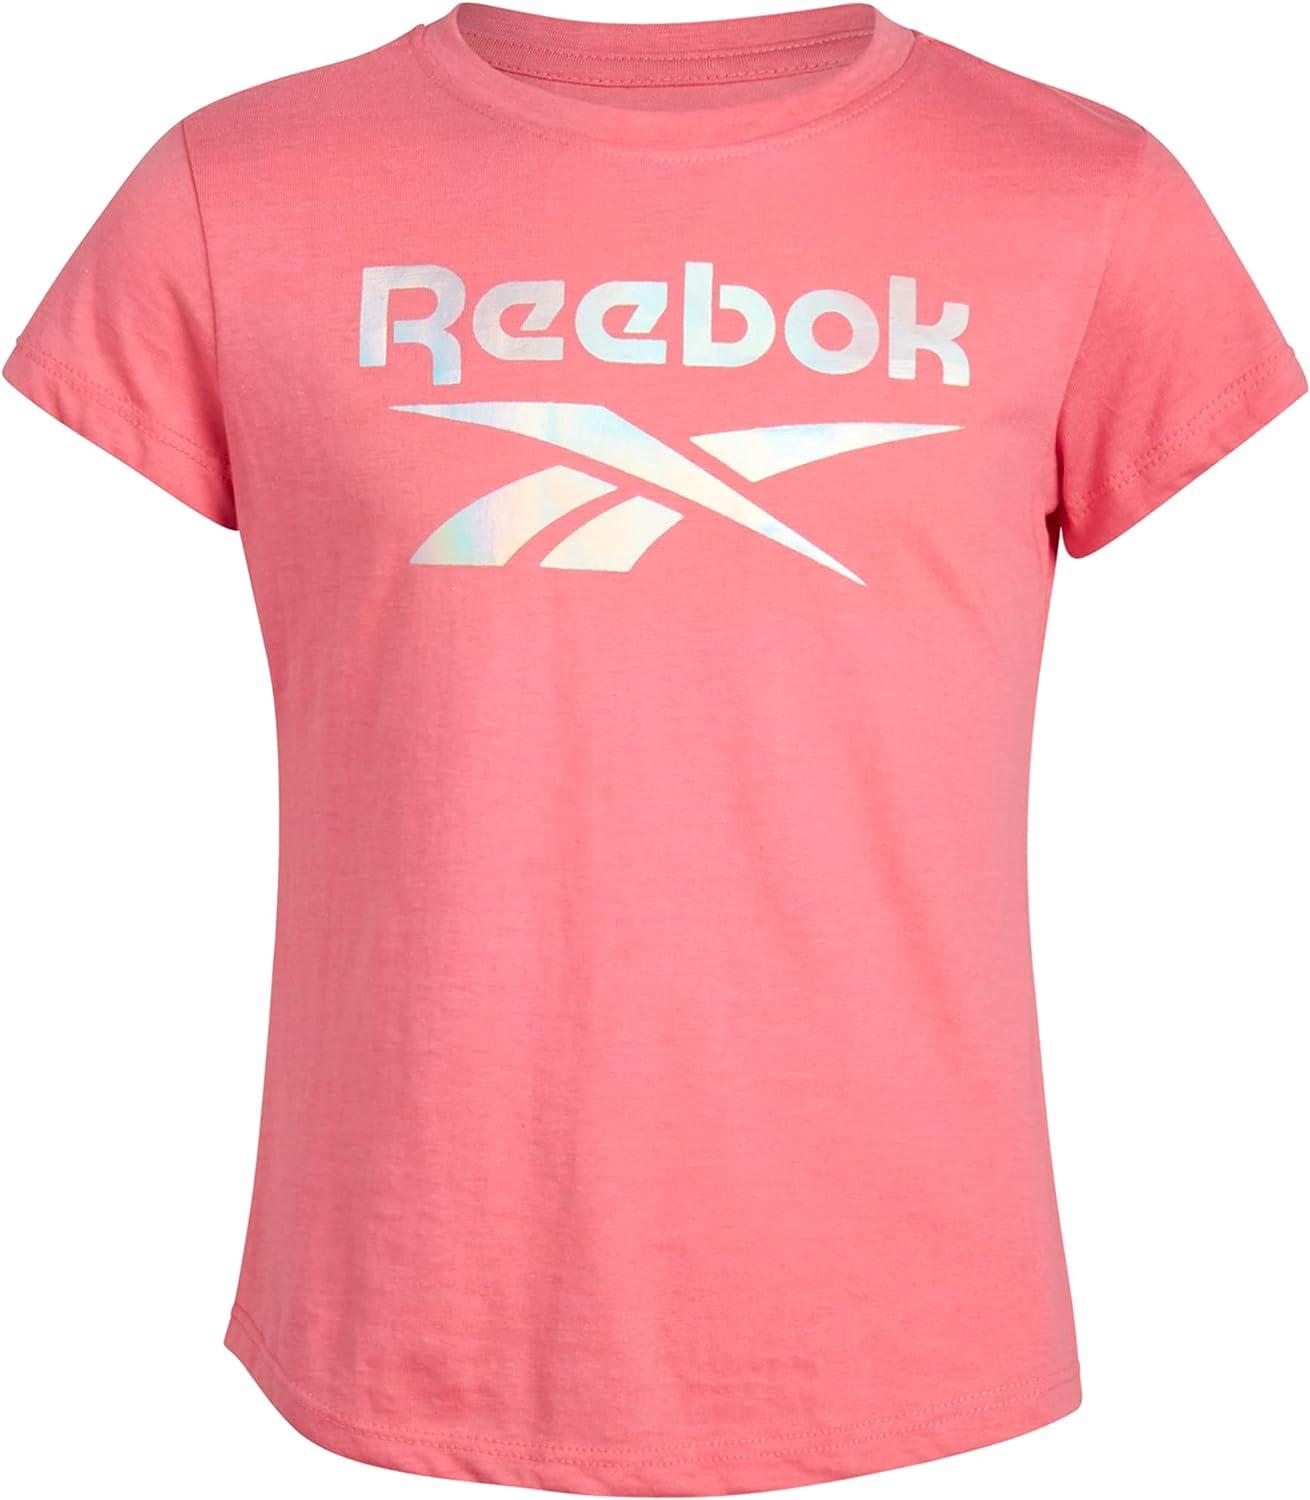 Reebok Girls' T-Shirt - 2 Pack Short Sleeve Fashion Tee Kids